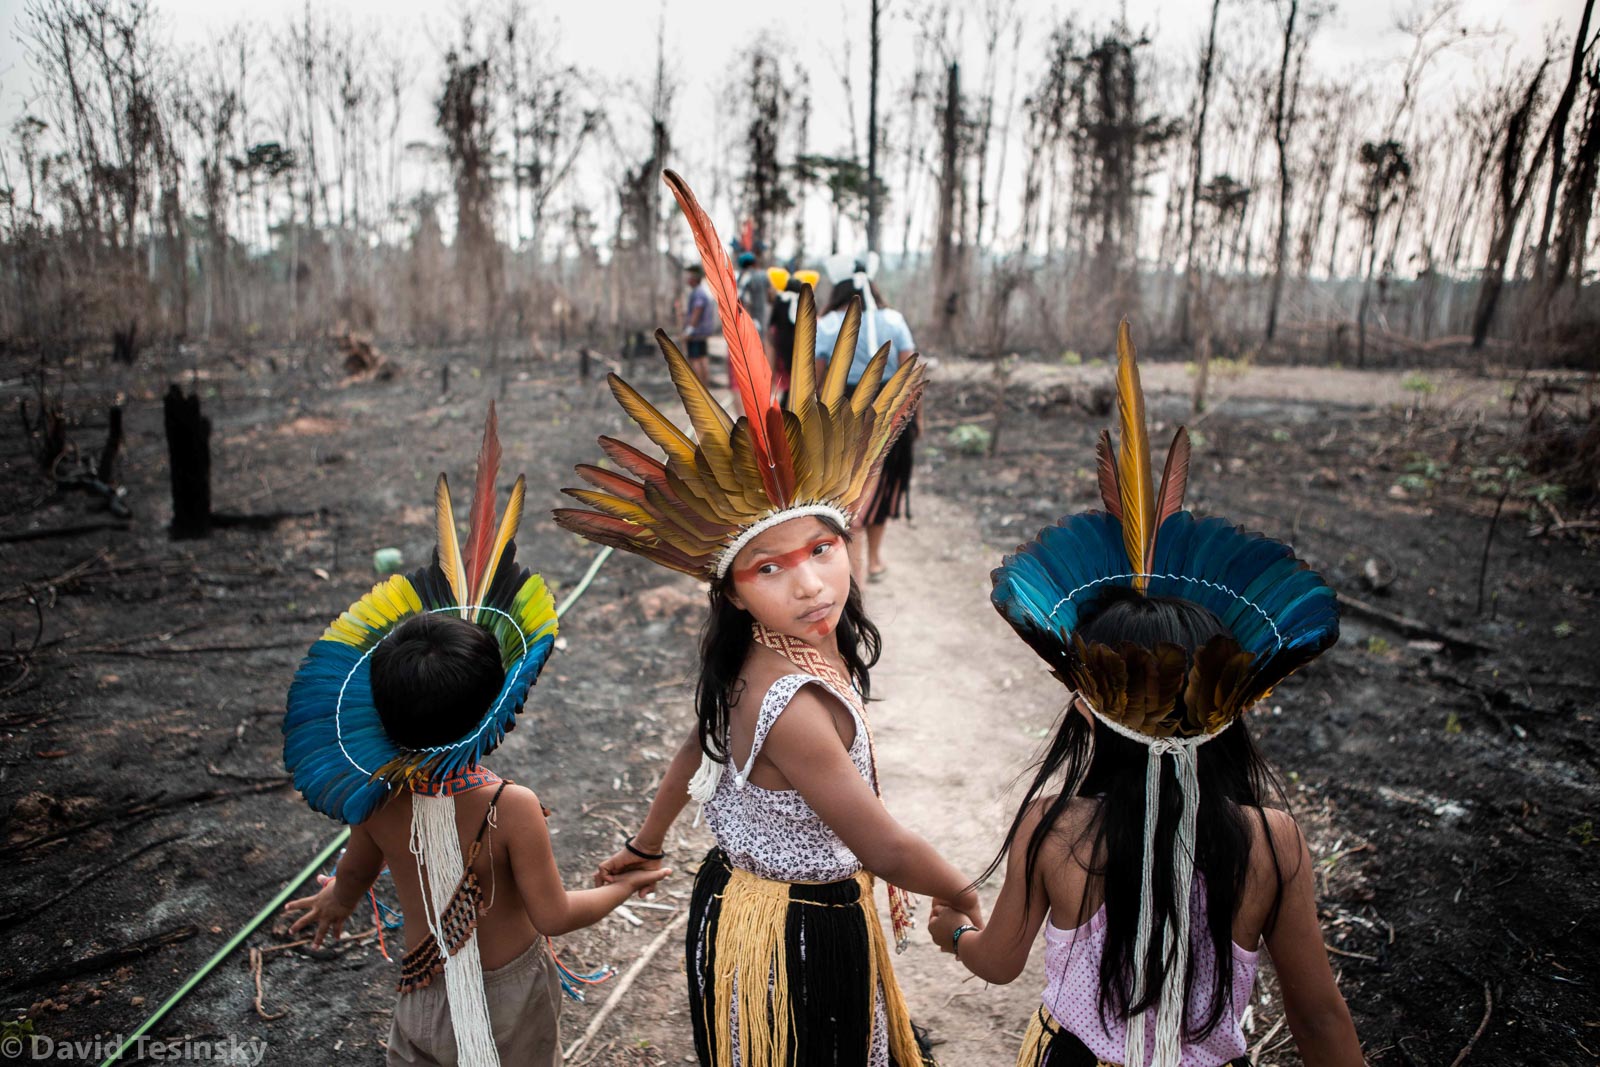 Man-Made Fires destroying homes in Amazonia (Brazil) - David Tesinsky